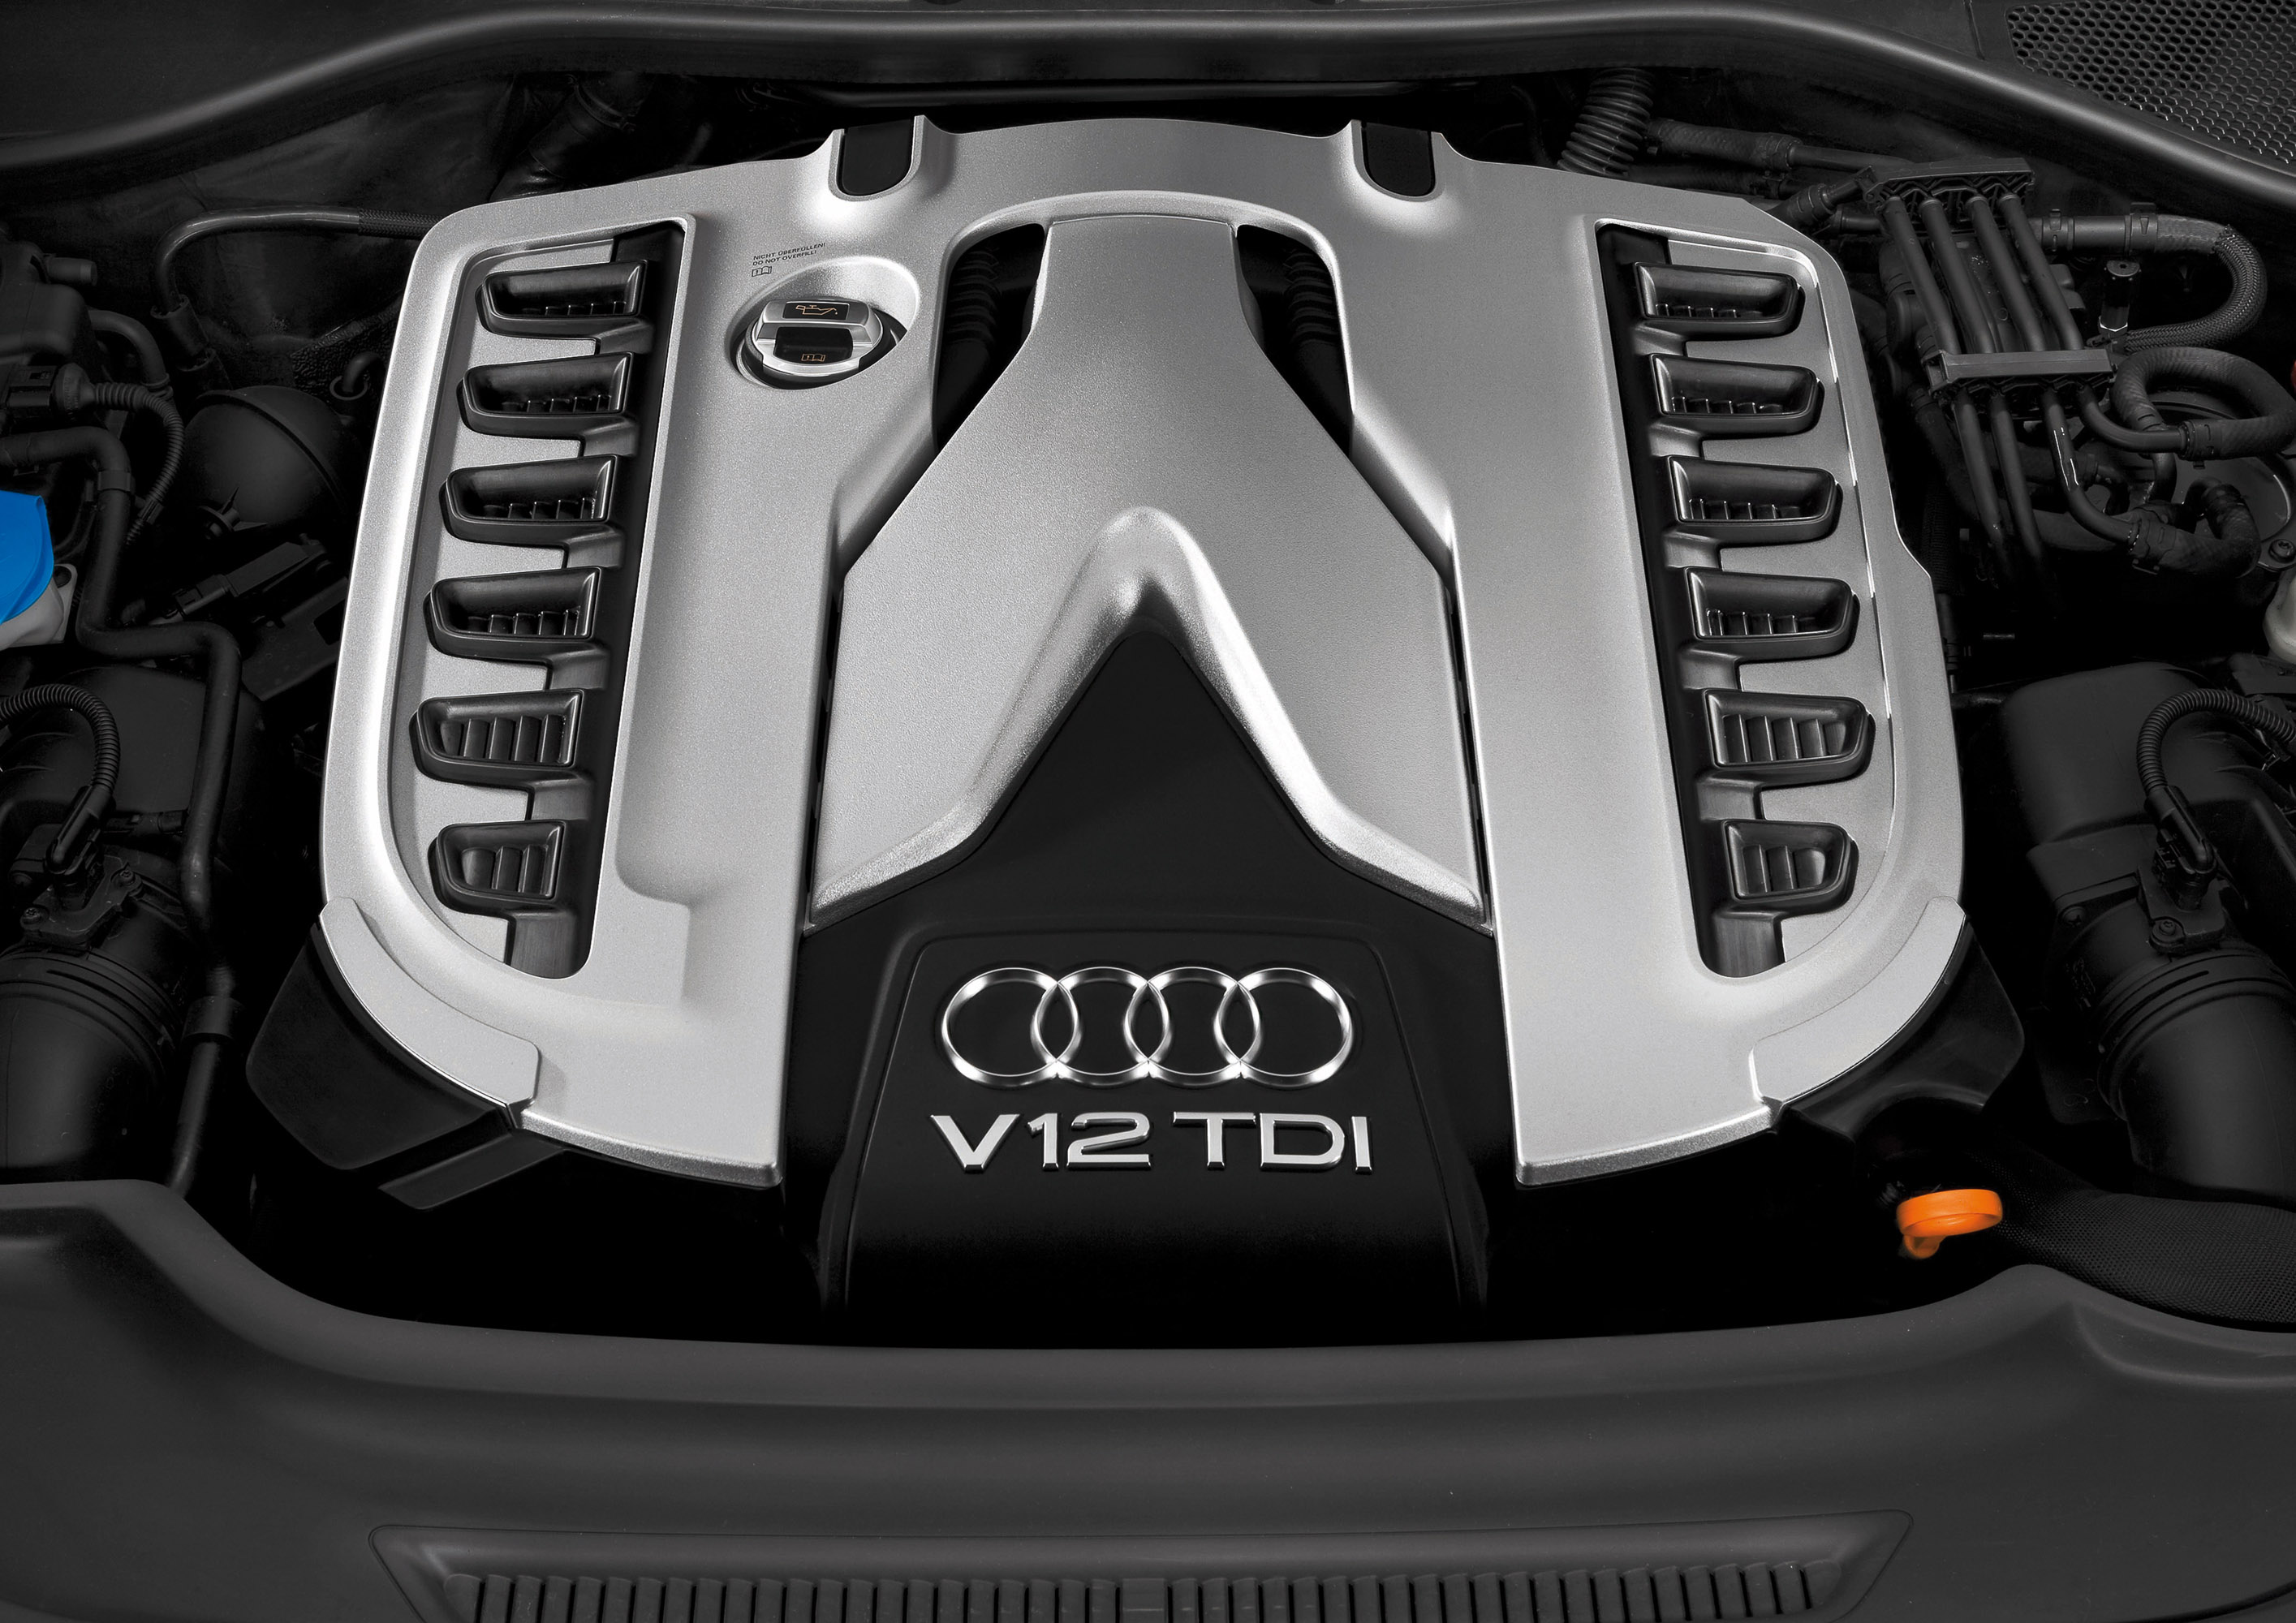 Купить й 7. Audi q7 v12. Audi q7 v12 Diesel. Audi q7 6.0 v12 TDI. Audi q7 v12 TDI мотор.